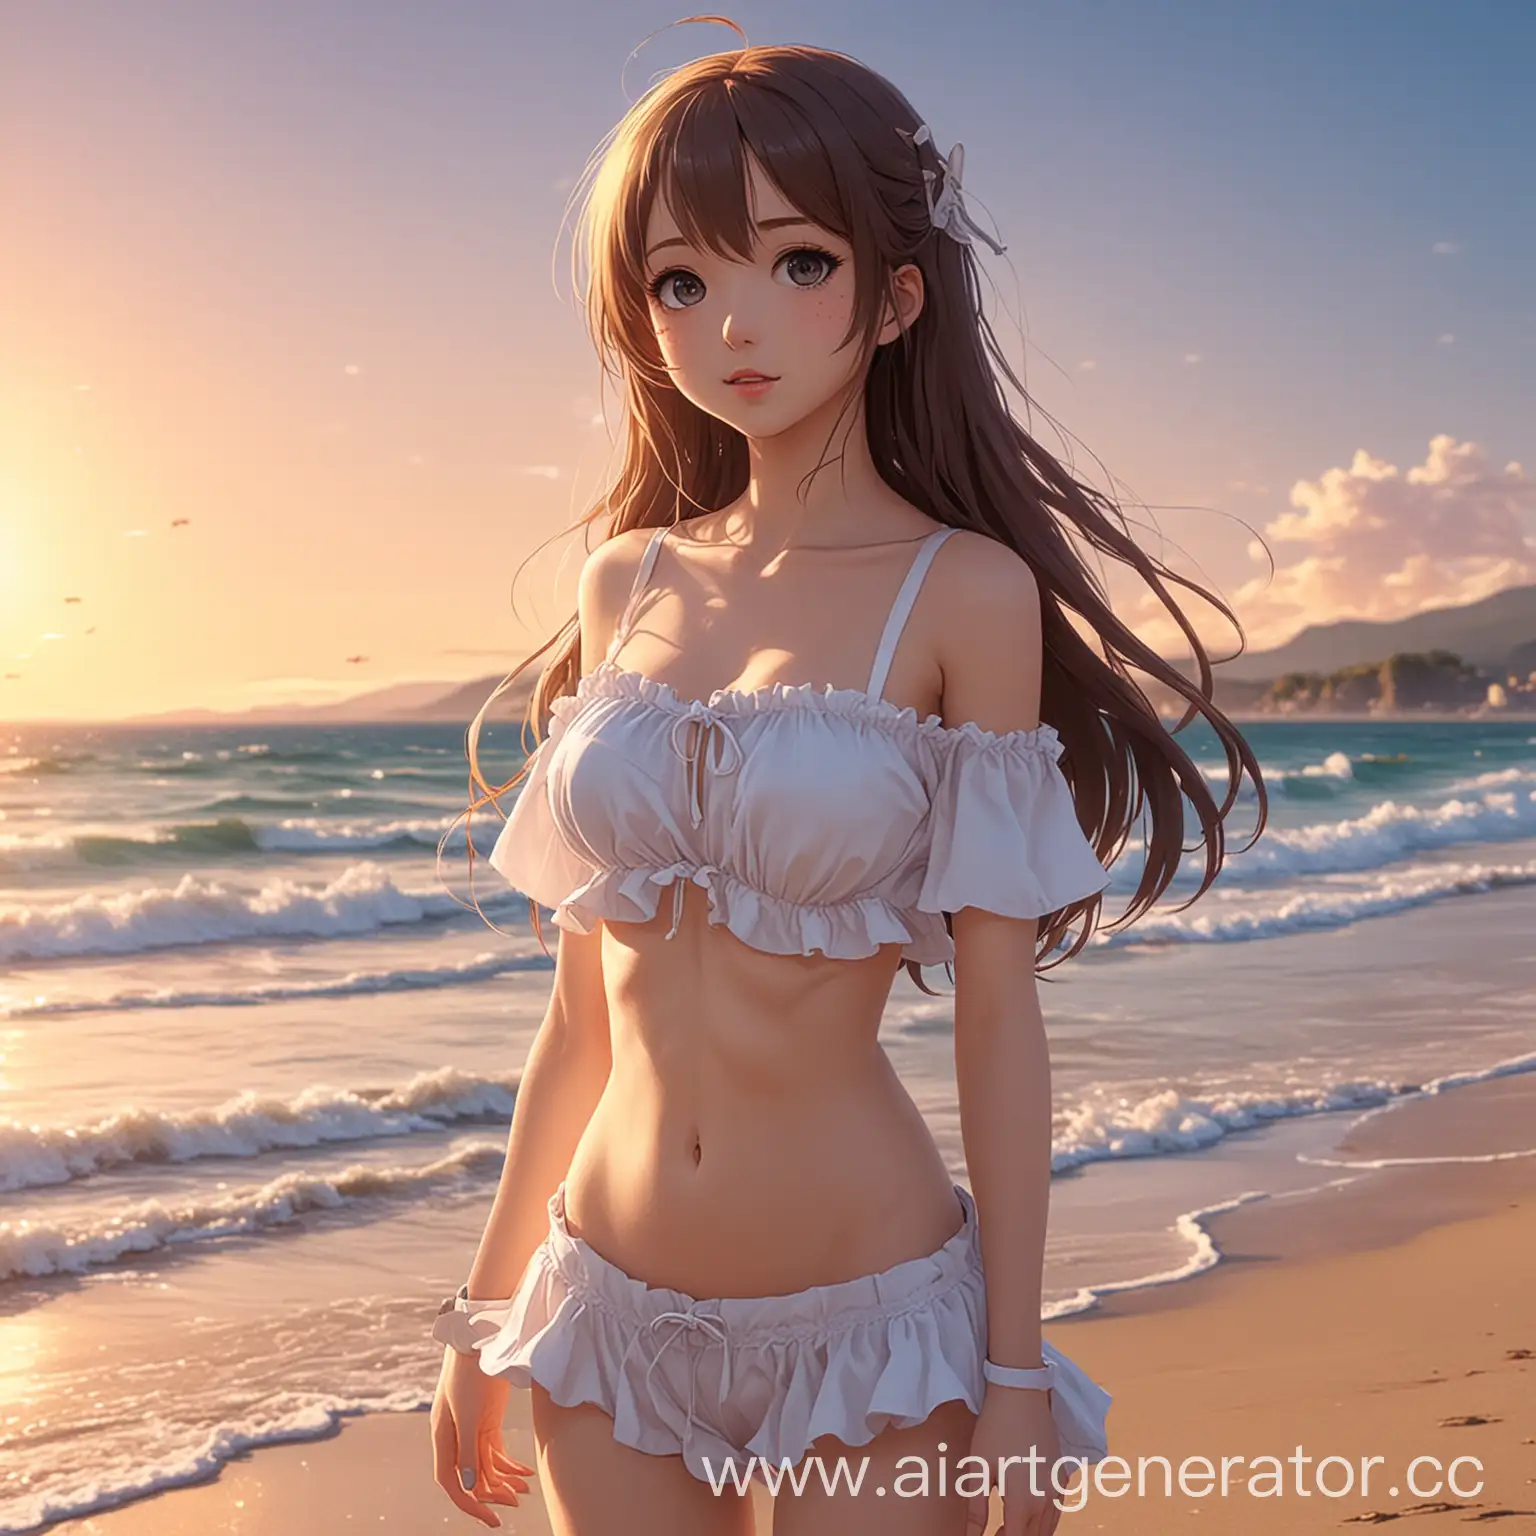 Anime-Girl-Enjoying-Sunset-at-the-Beach